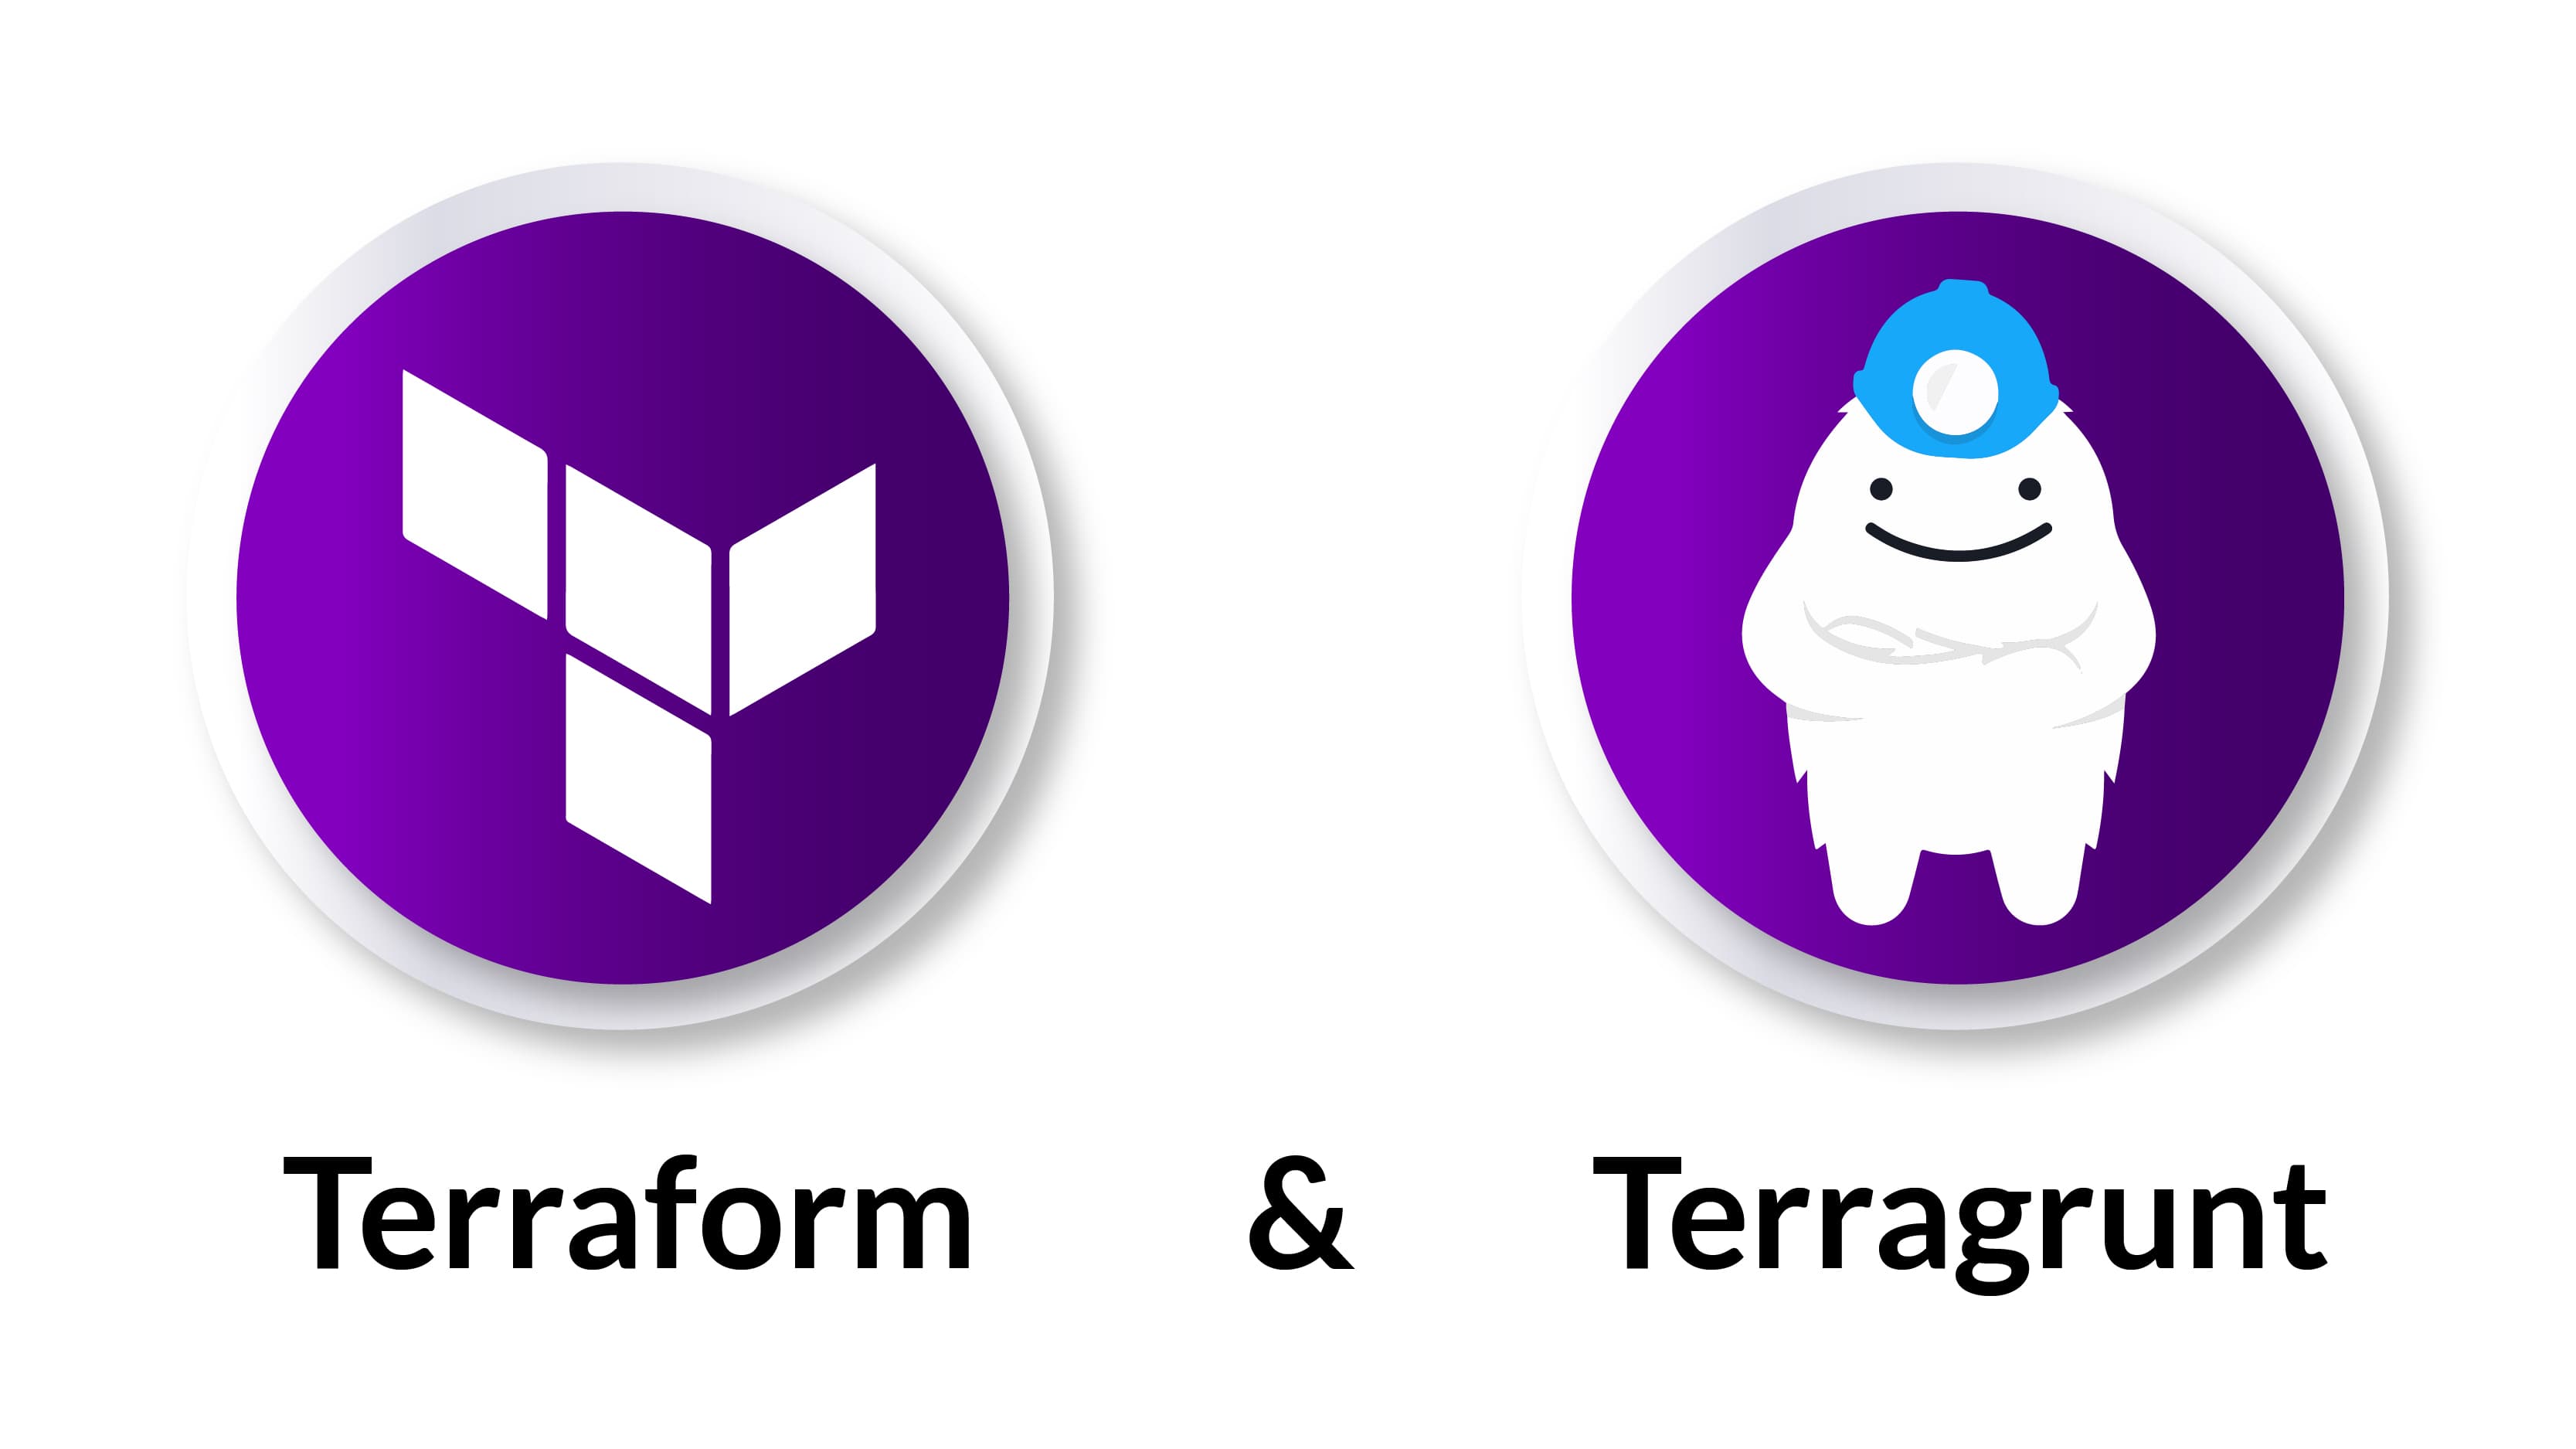 Terraform and Terragrunt logos